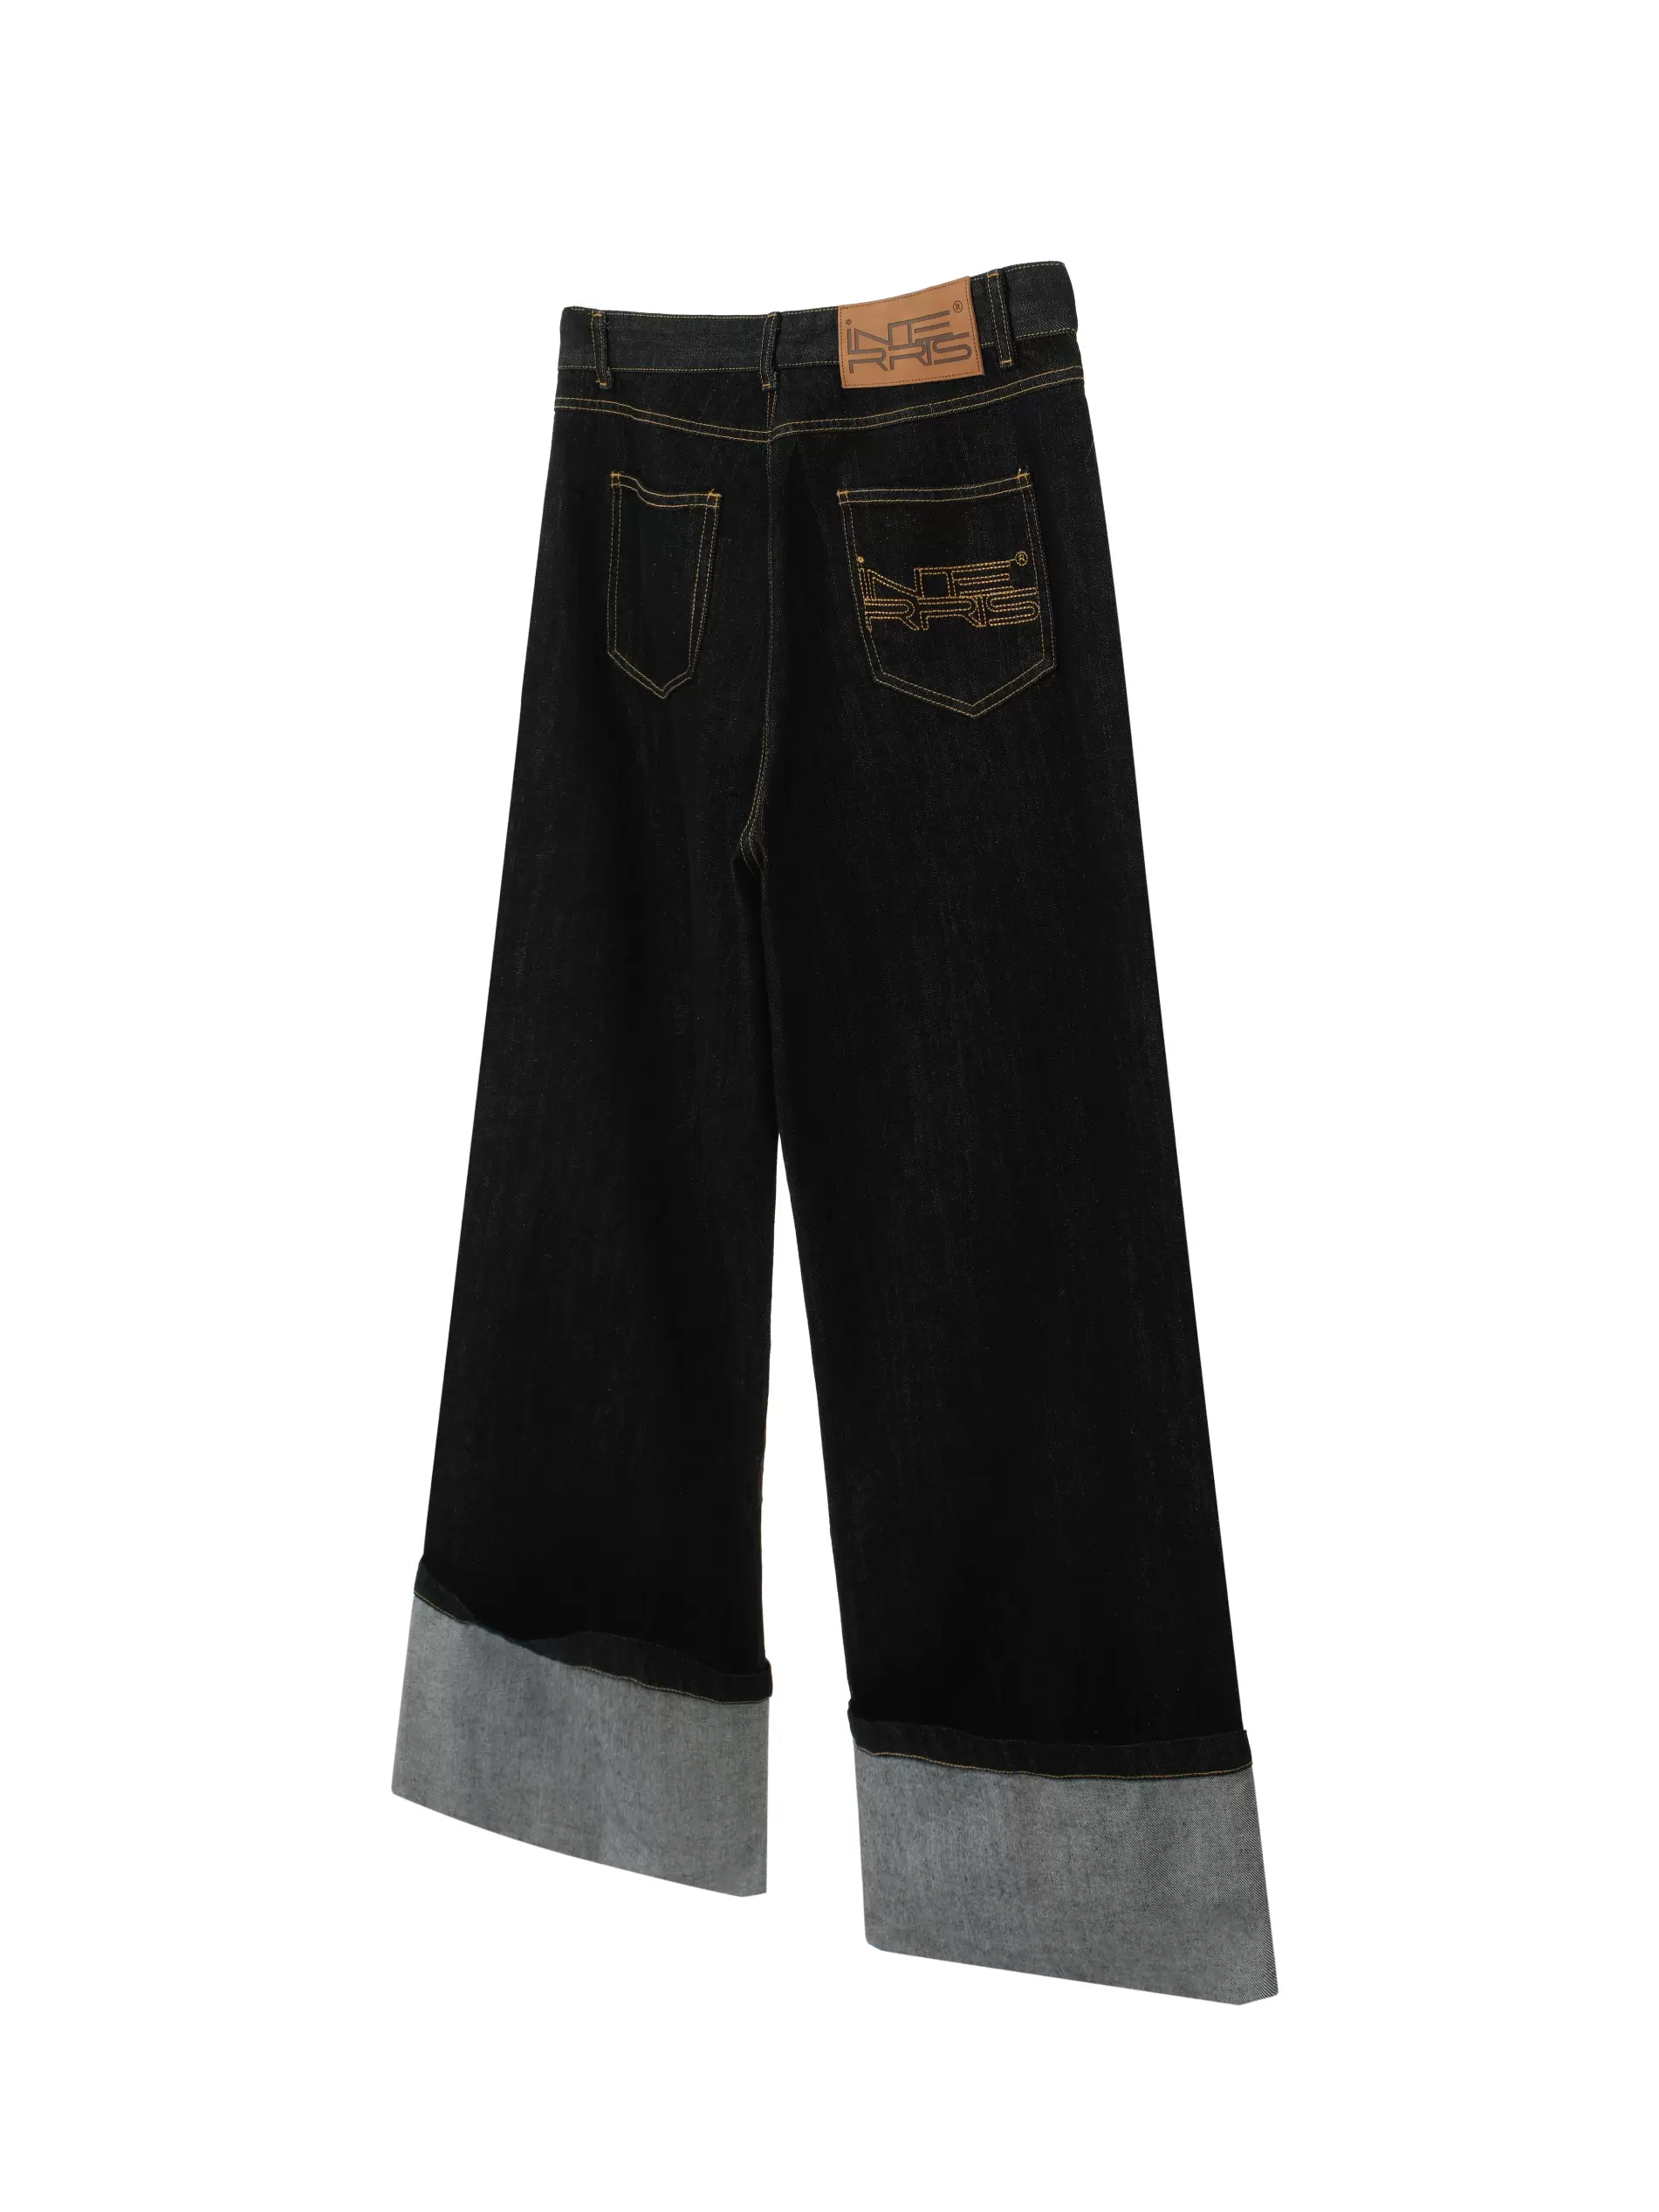 INTERRIS 23AW design jeans - パンツ